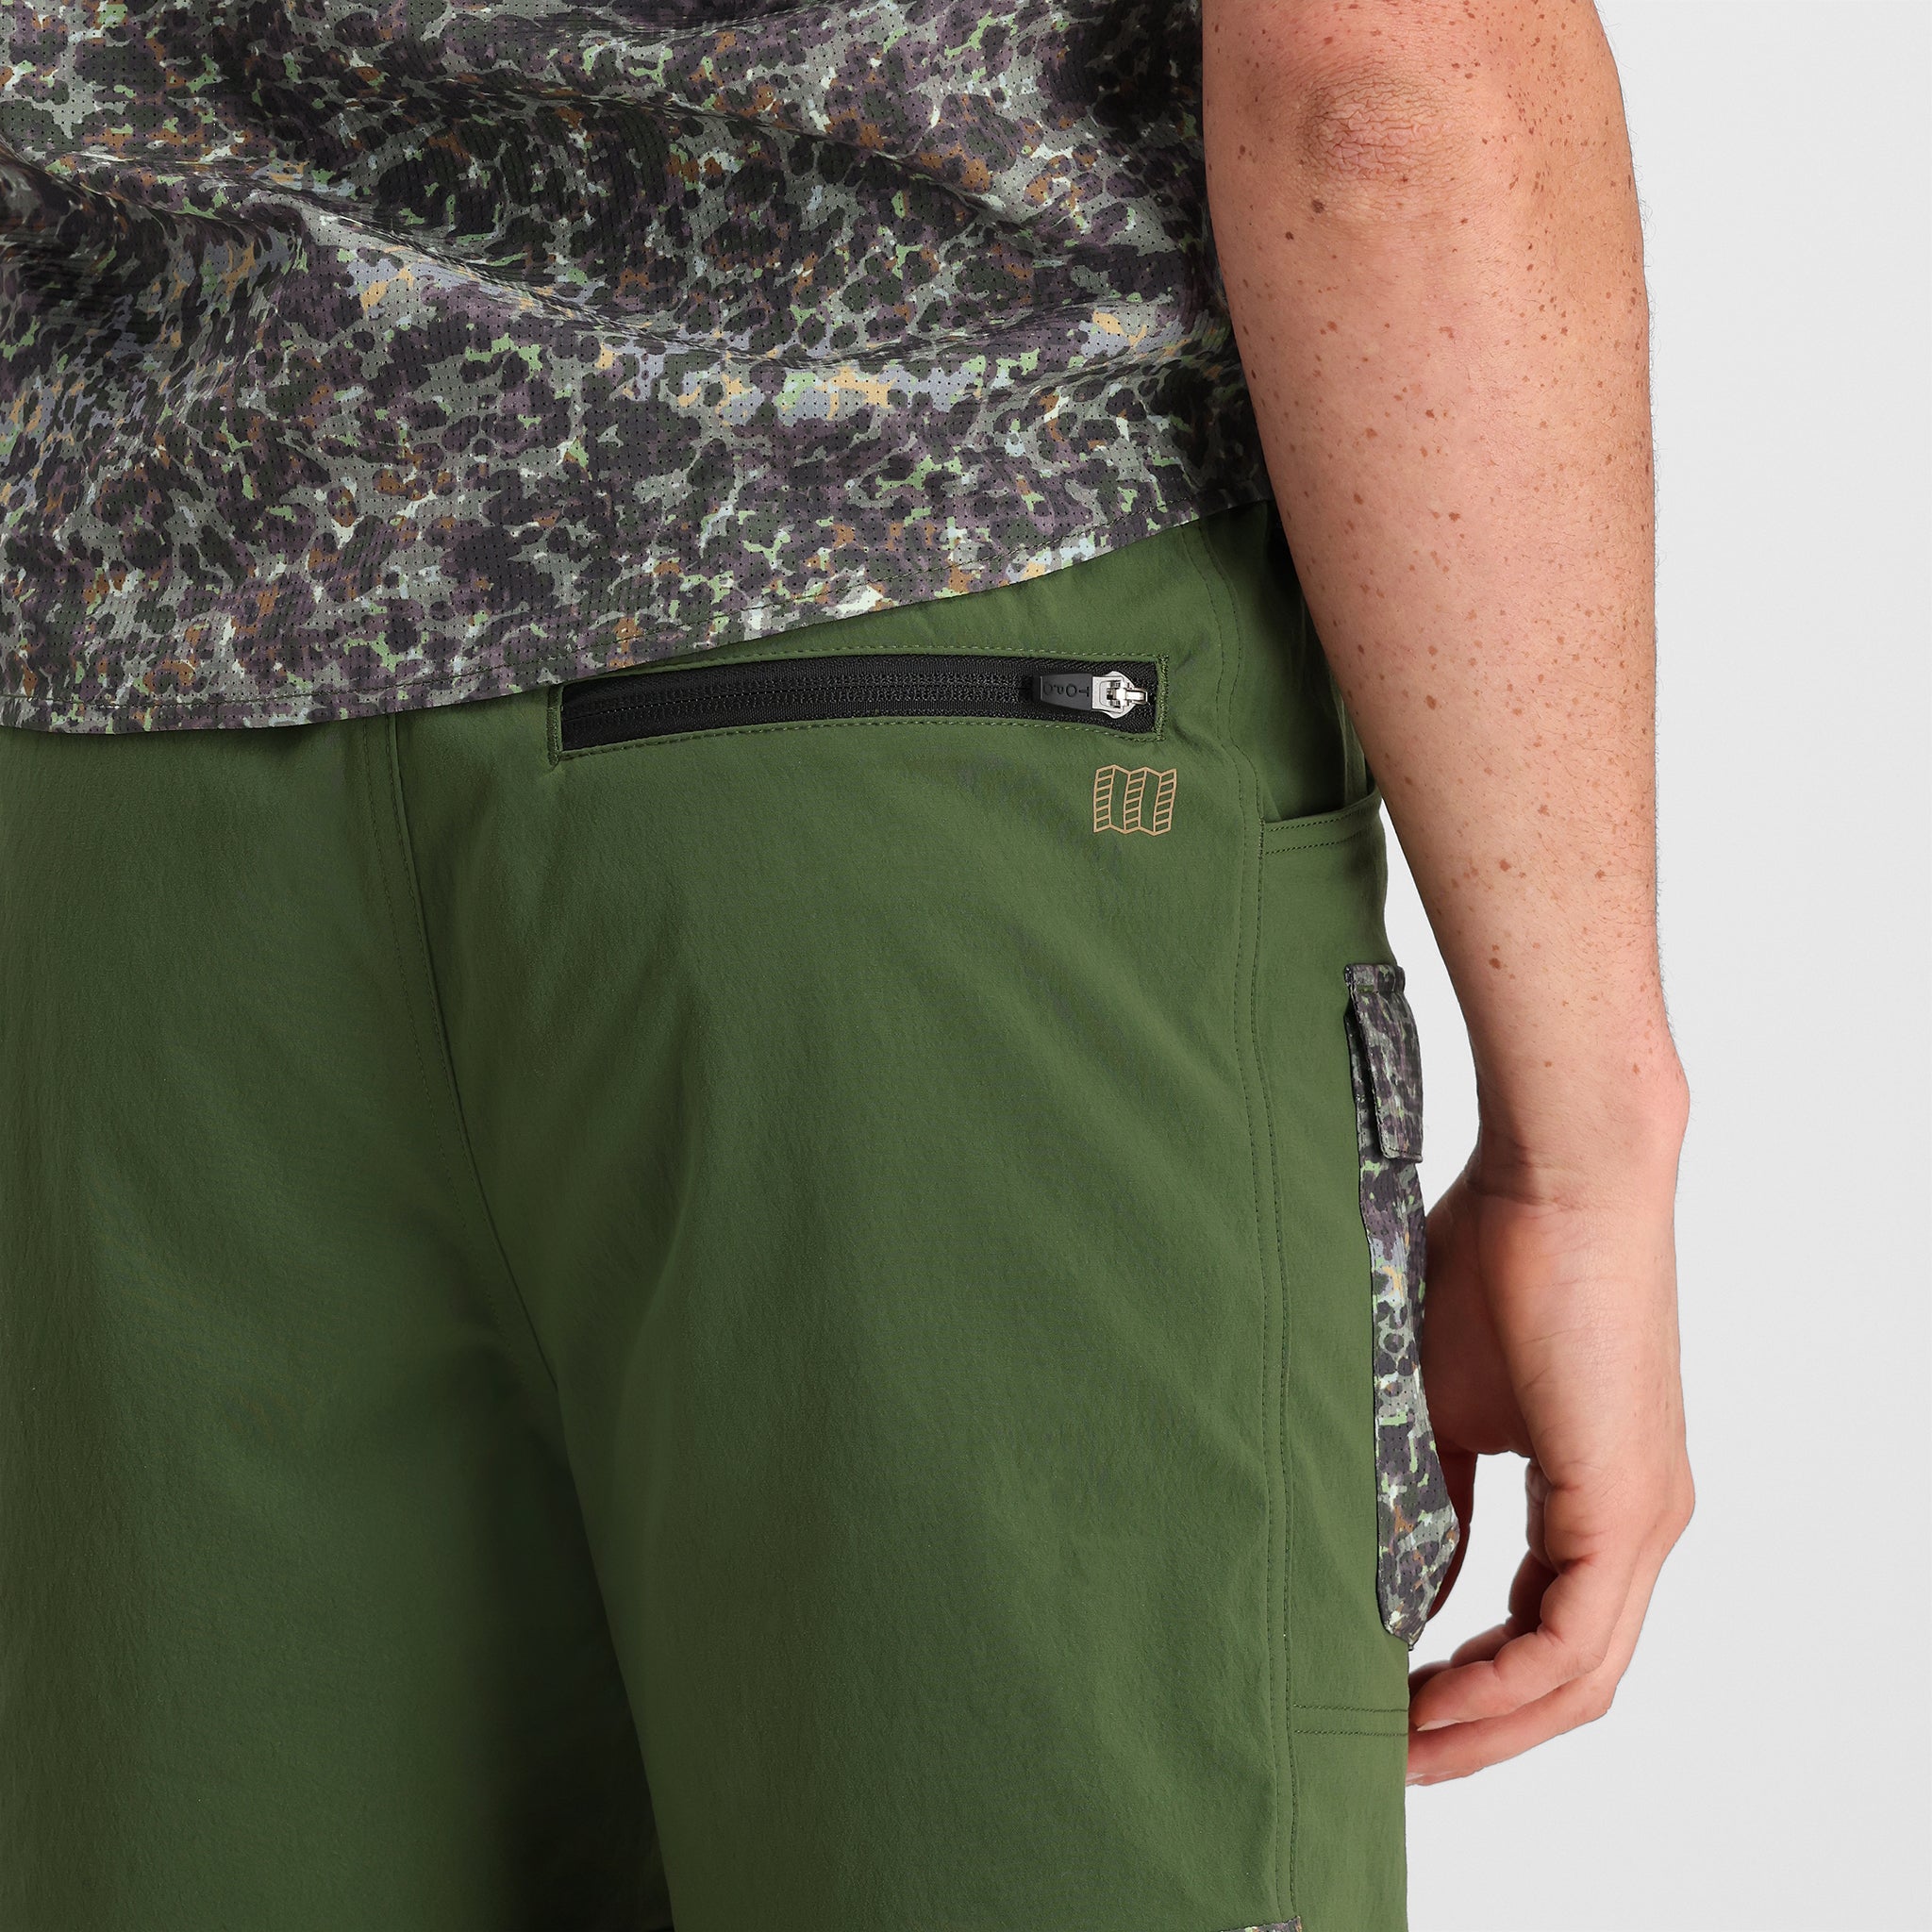 Detail shot of Topo Designs Retro River Shorts - Men's in "Olive / Meteor"